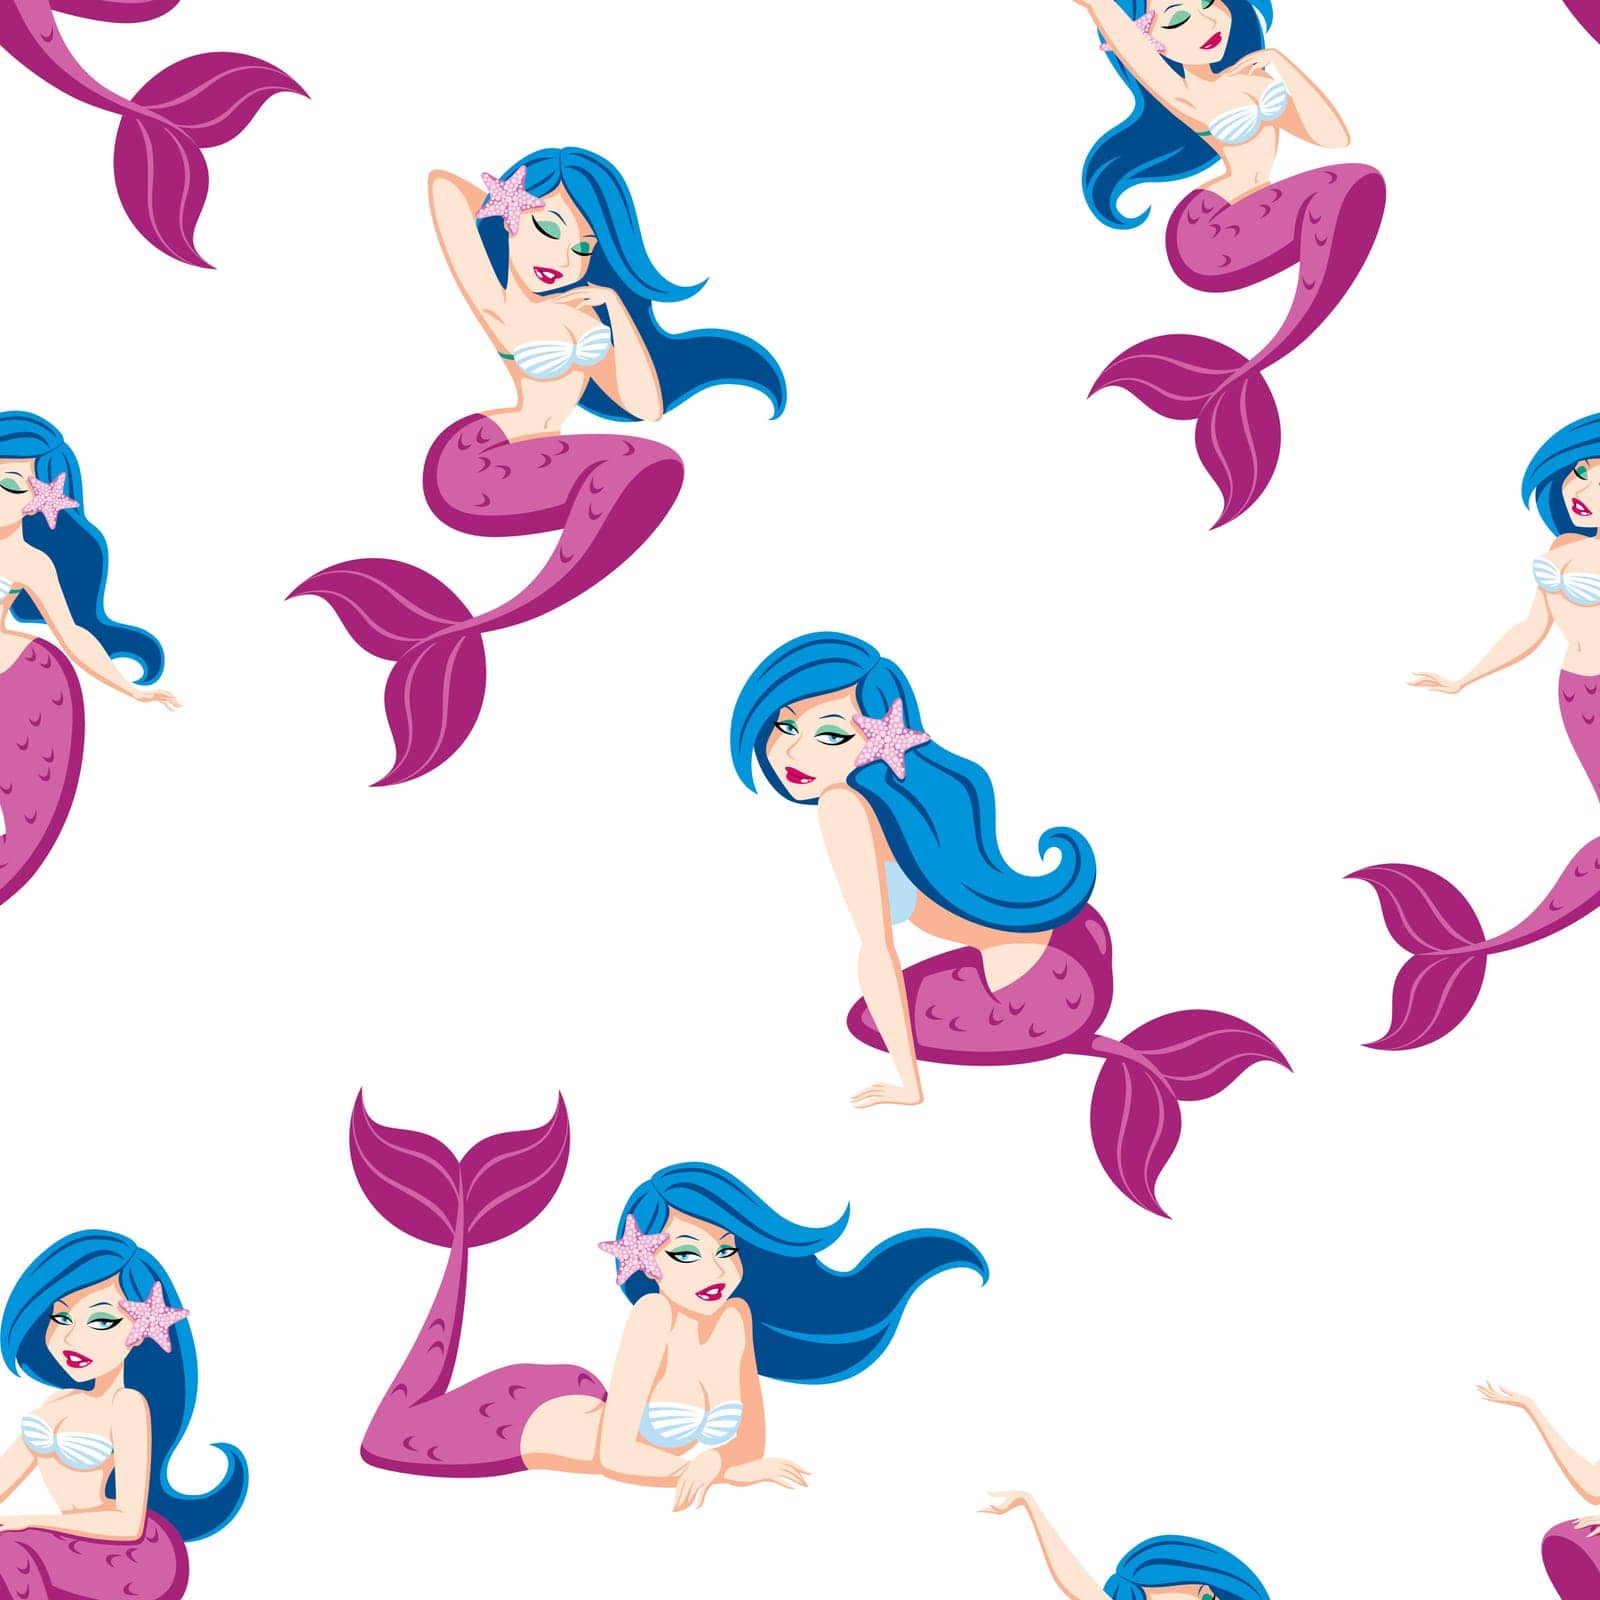 Mermaid Seamless Pattern by Malchev